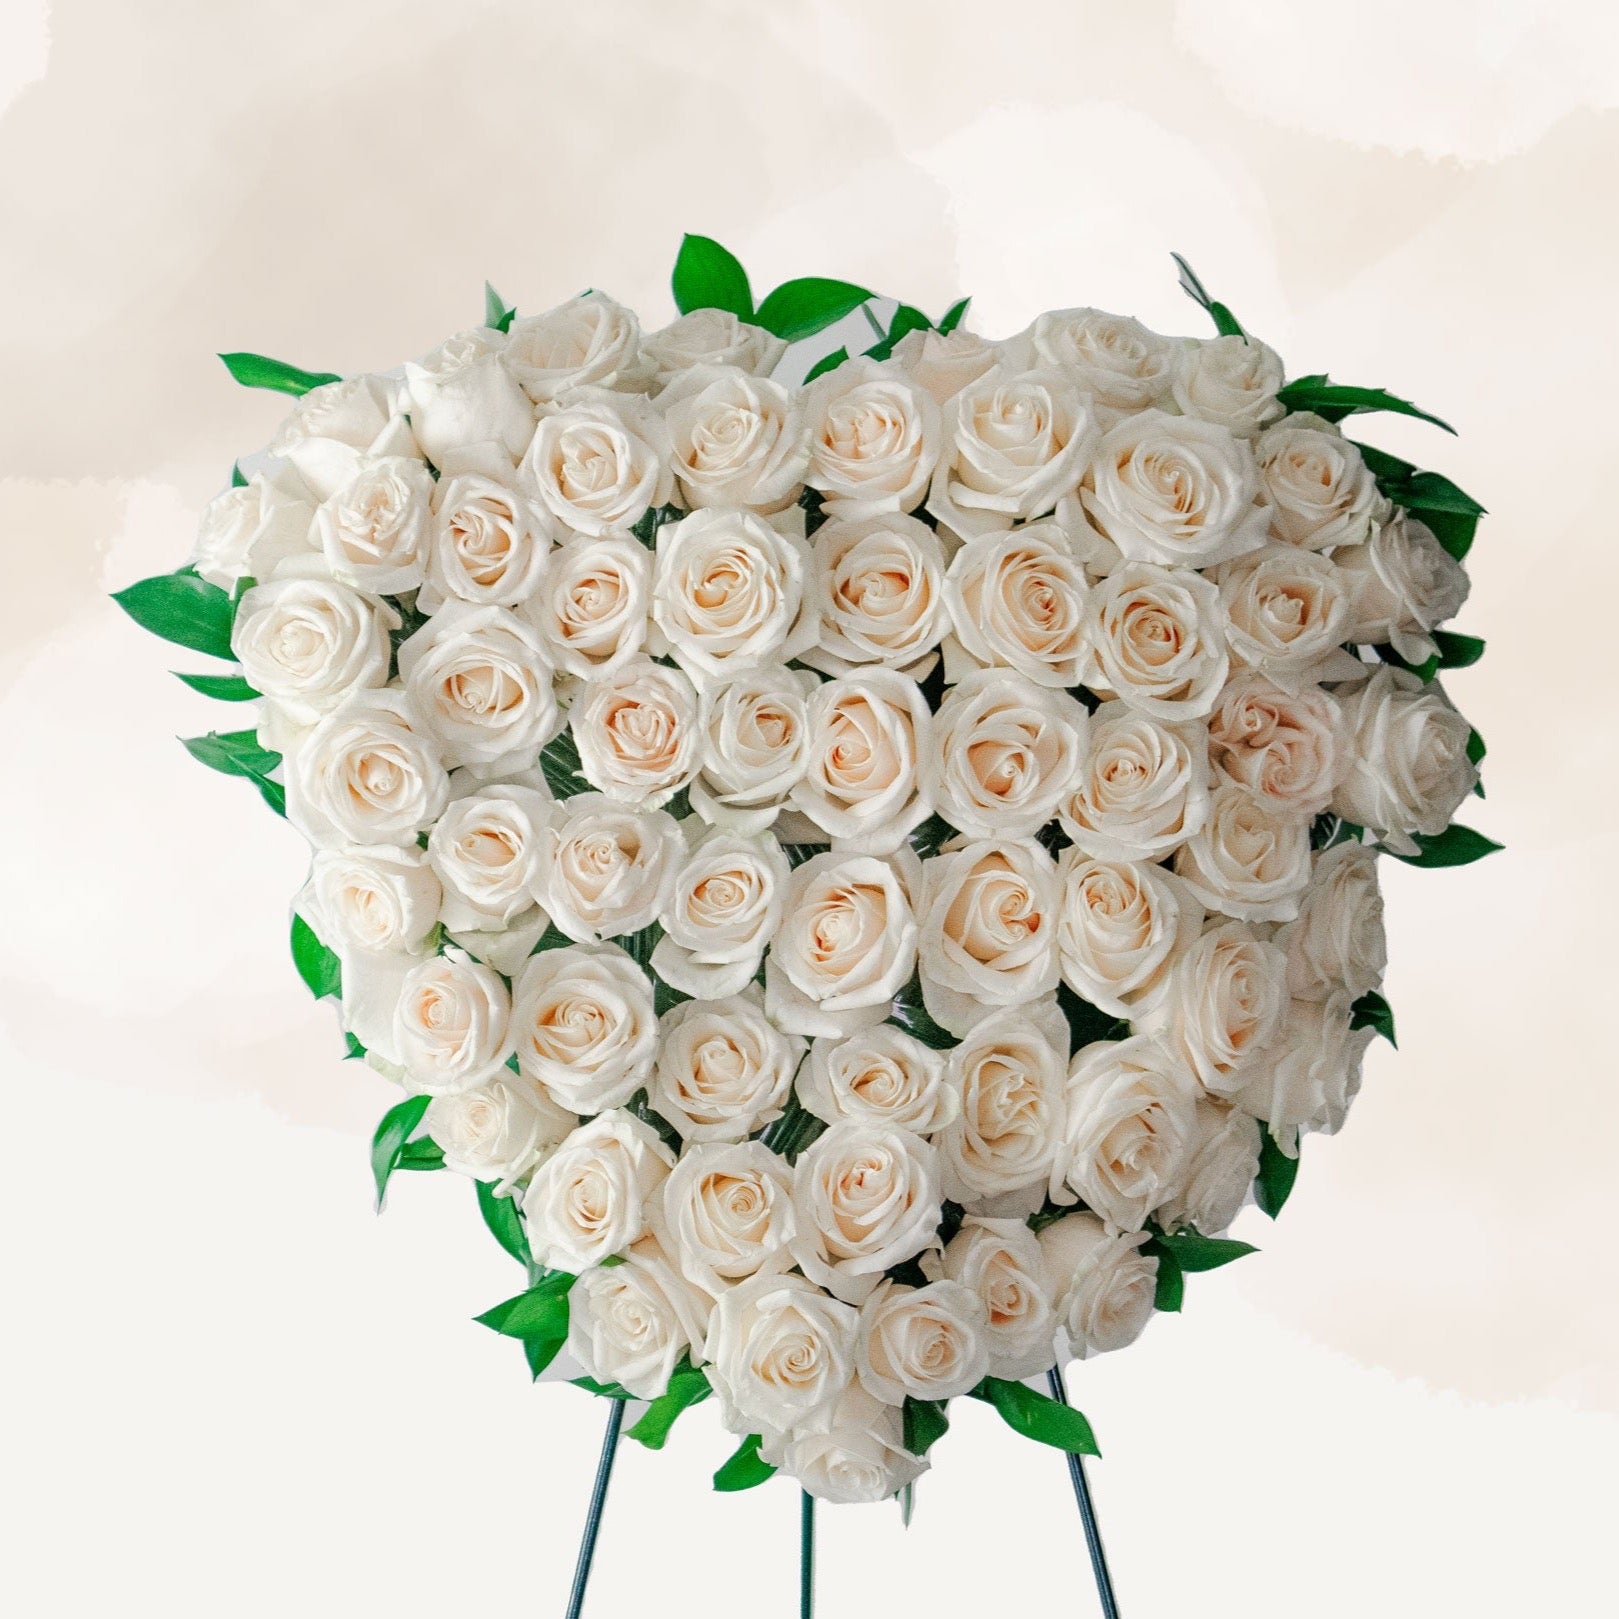 WW-138 PEACEFUL HEART - Heart spray all white roses and hydrangeas